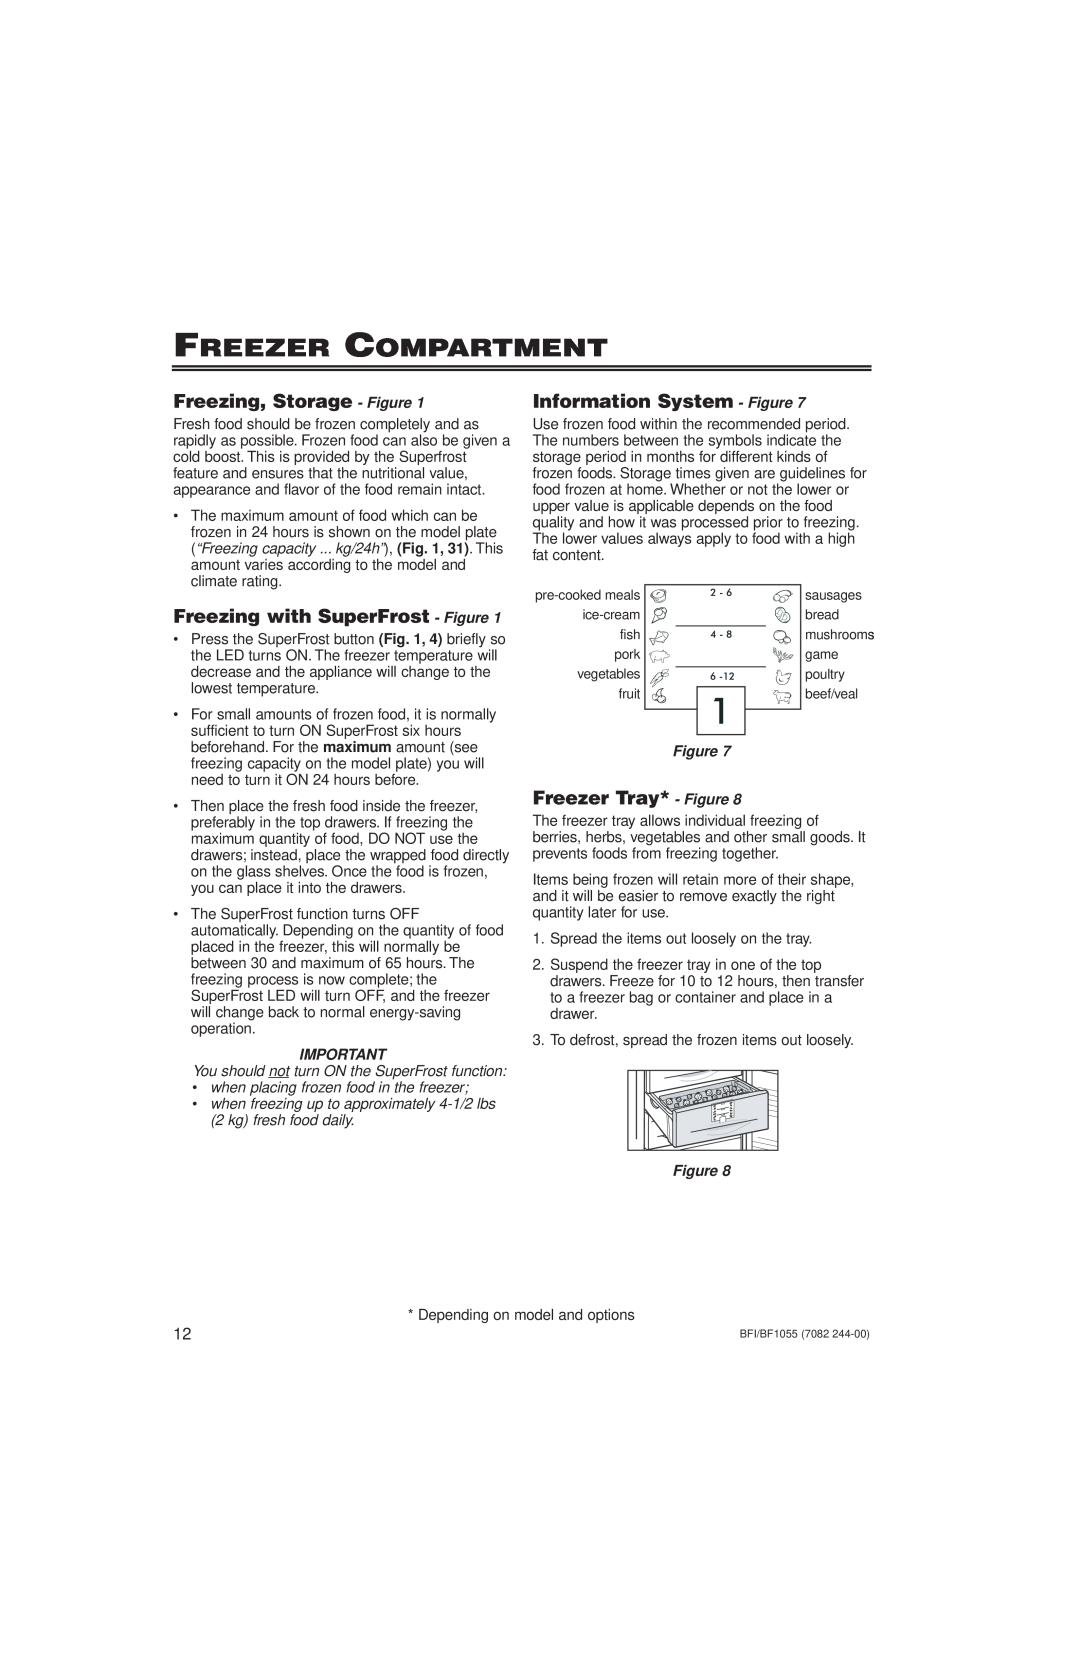 Liebherr 7082 Freezer Compartment, Freezing, Storage - Figure, Freezing with SuperFrost - Figure, Freezer Tray* - Figure 